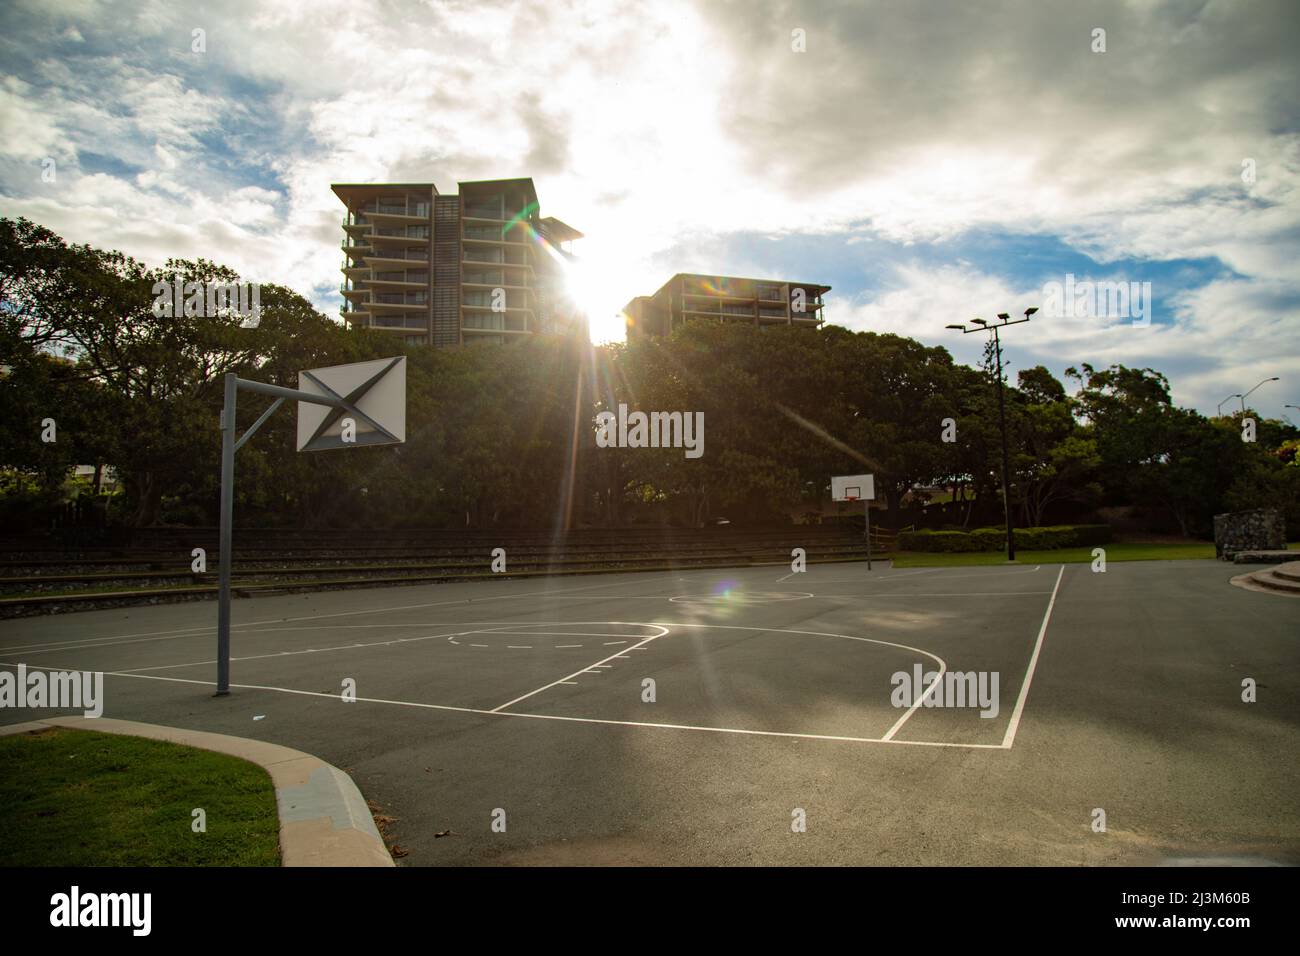 Öffentlicher Basketballplatz im Settlement Cove Park, Redcliffe Australien Stockfoto